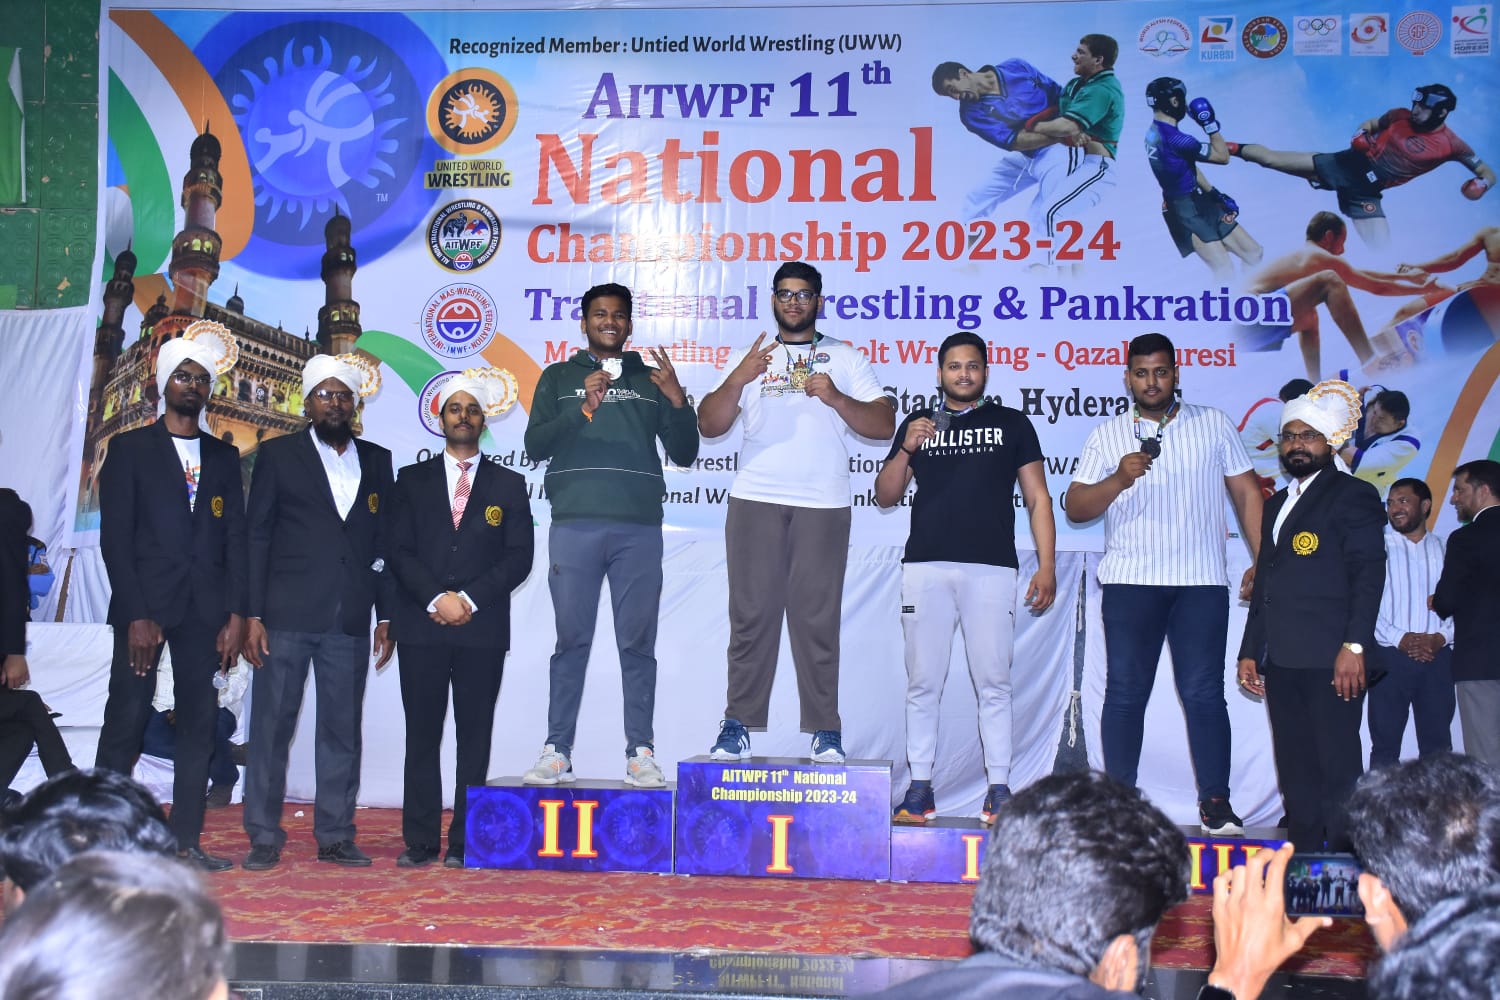 11th AITWPF National Championship, 1-4 Feb. 2024, Hyderabad, Telangana


MOHAMMED SAIF ALI 
(1604-21-748-007)
AIML - 3RD YEAR.

Has Participated in the 11th AITWPF National Championships.


Won
1) Gold Medal 🏅 - Mas Wrestling 

2) Gold Medal 🏅 - Pankaration 

3)Bronz Medal - Belt Wrestling 

4) Bronz Medal - KhapsaGai